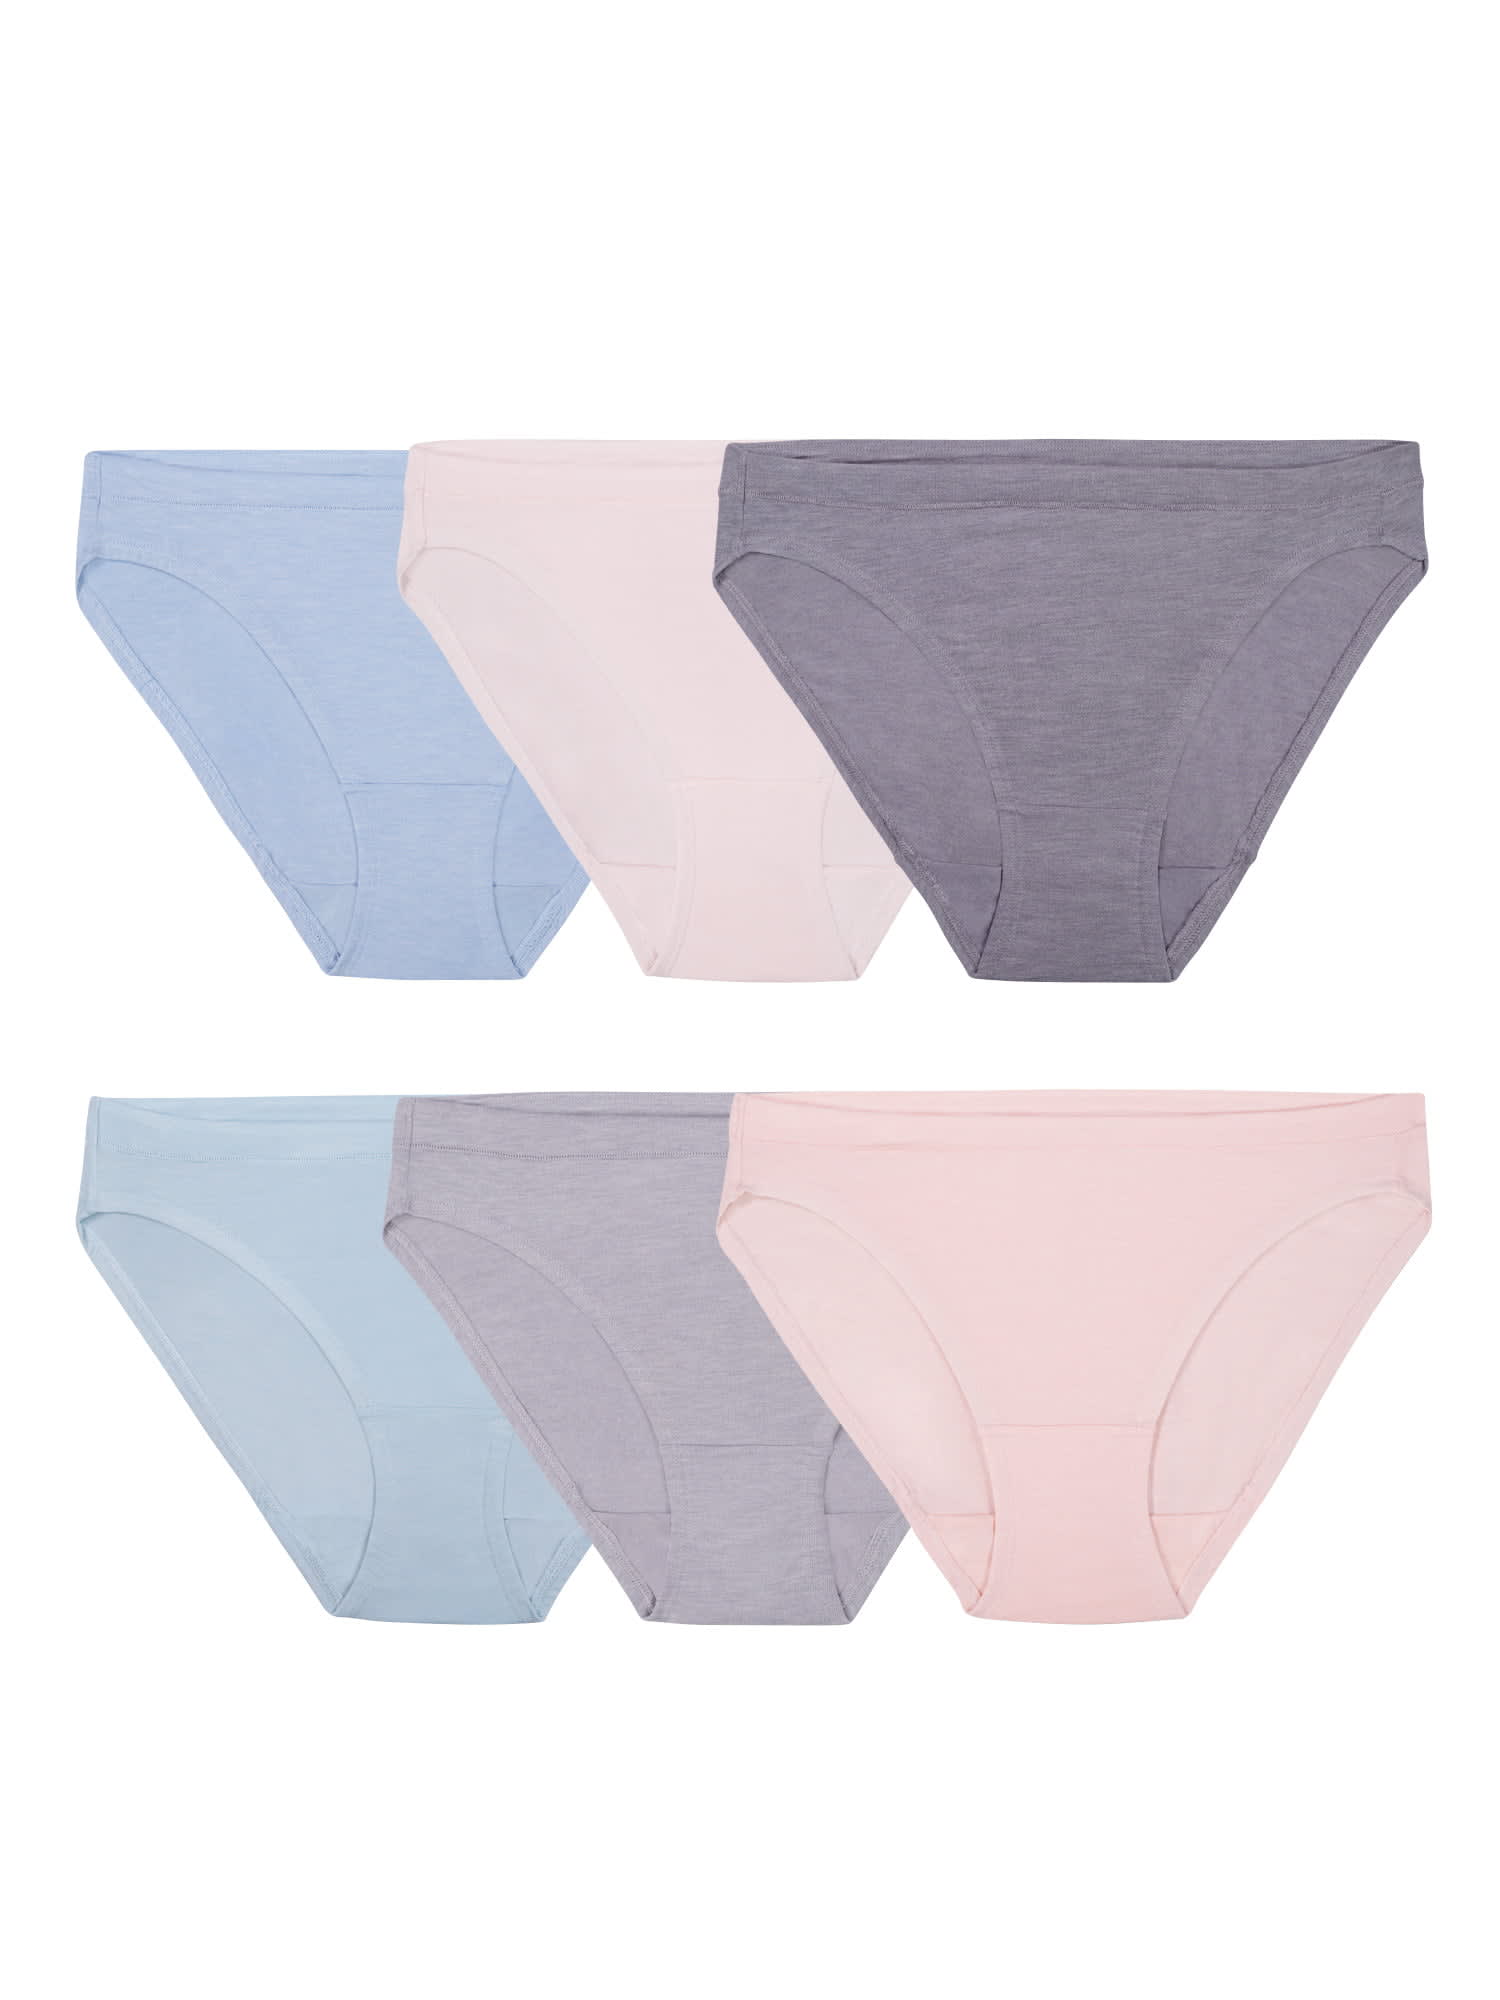 Hanes Women's Cool Comfort Cotton Brief Underwear, 6-Pack - DroneUp Delivery